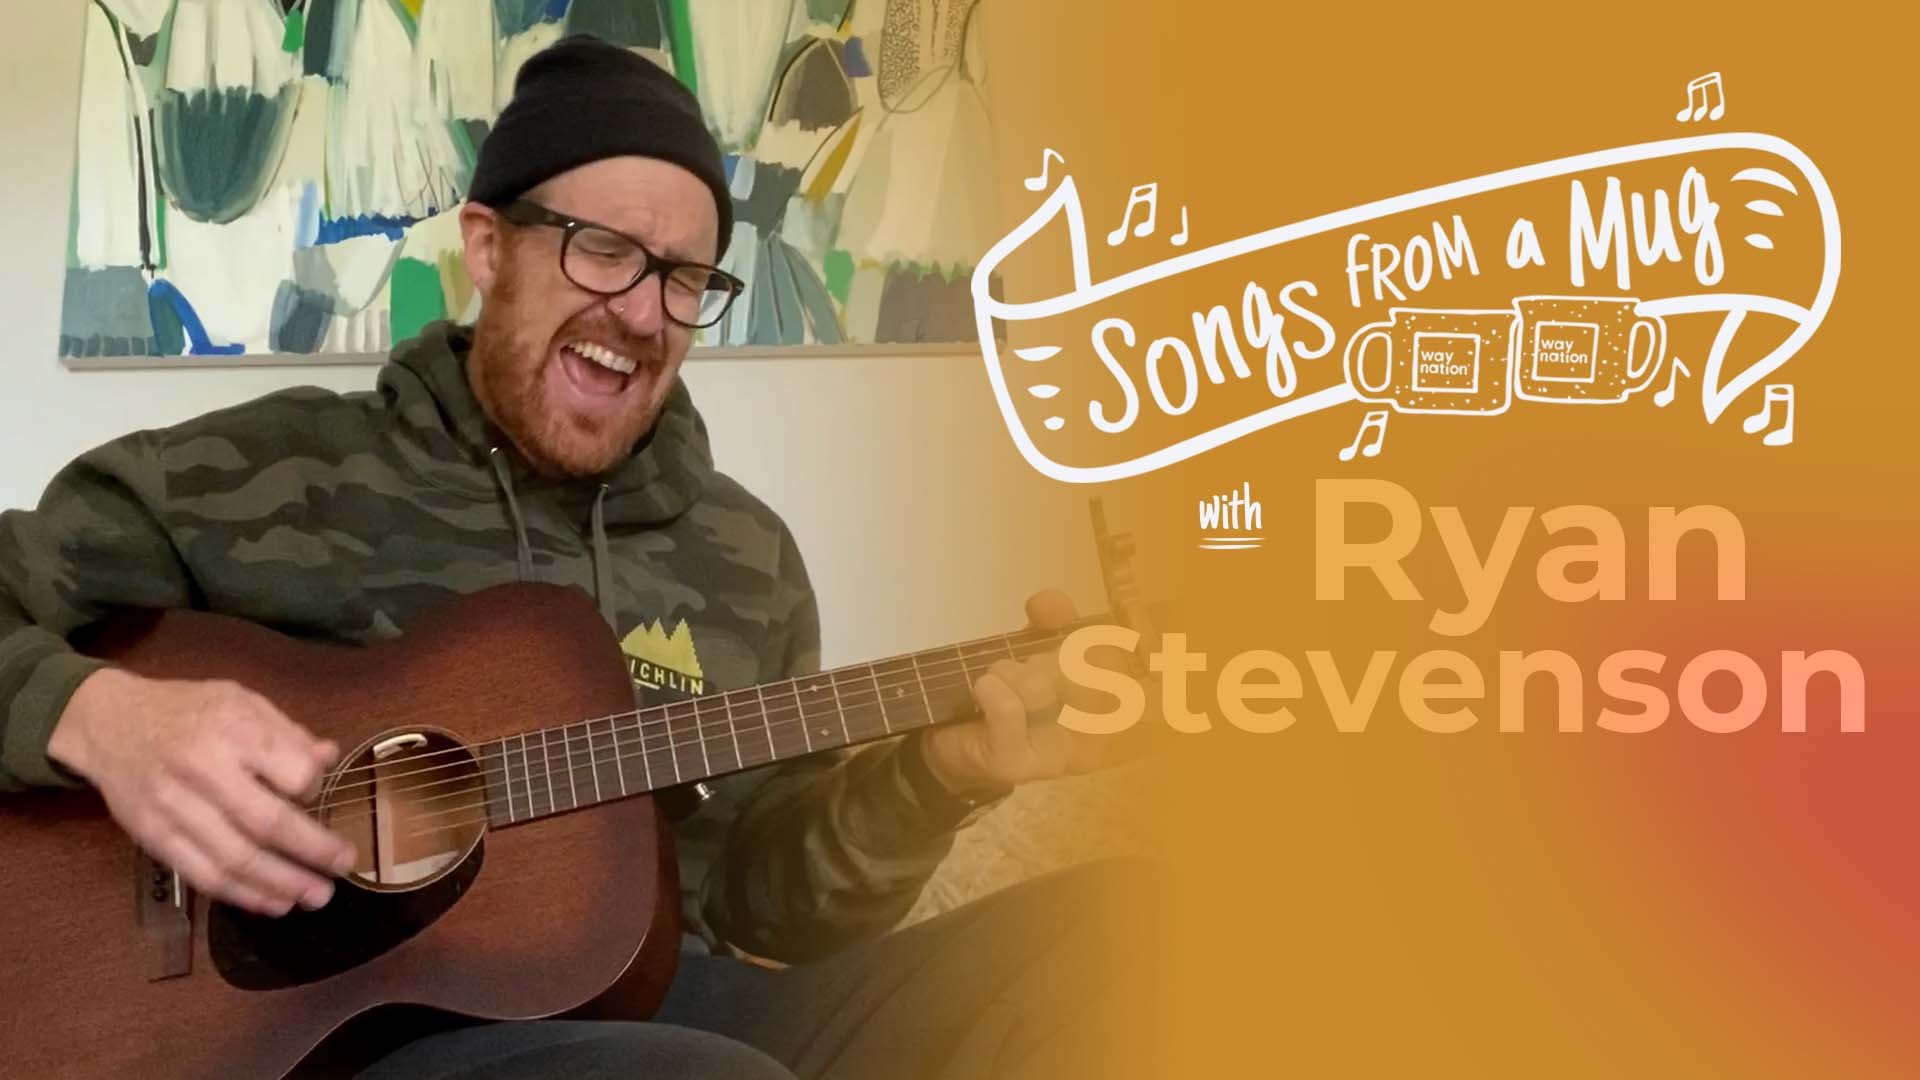 Ryan Stevenson Songs From a Mug